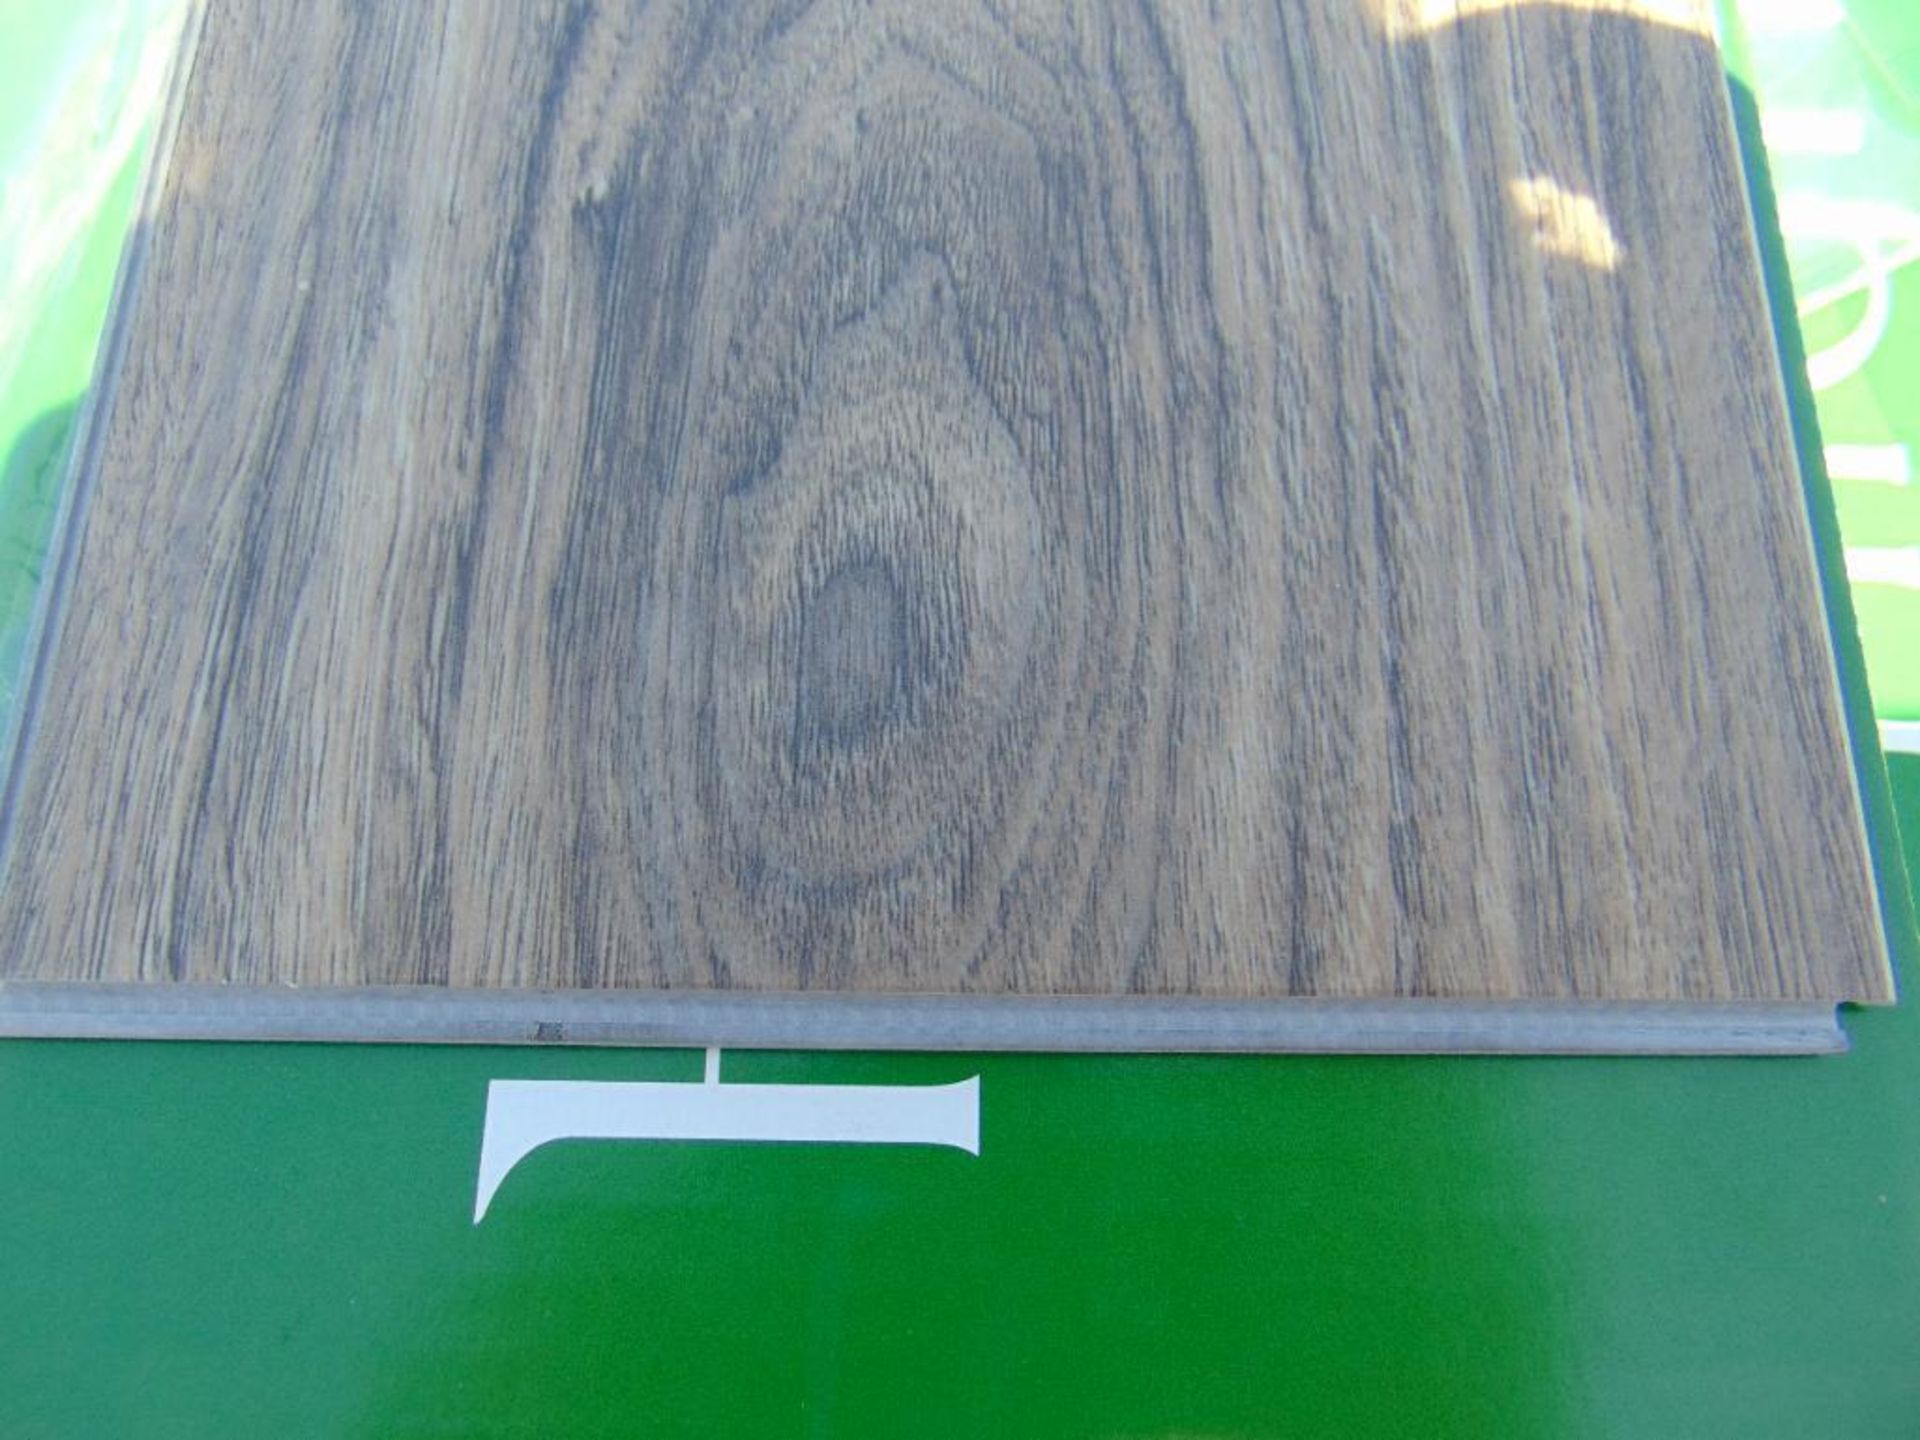 614.64 SF - Waterproof Click Together Vinyl Plank Flooring - Image 5 of 8